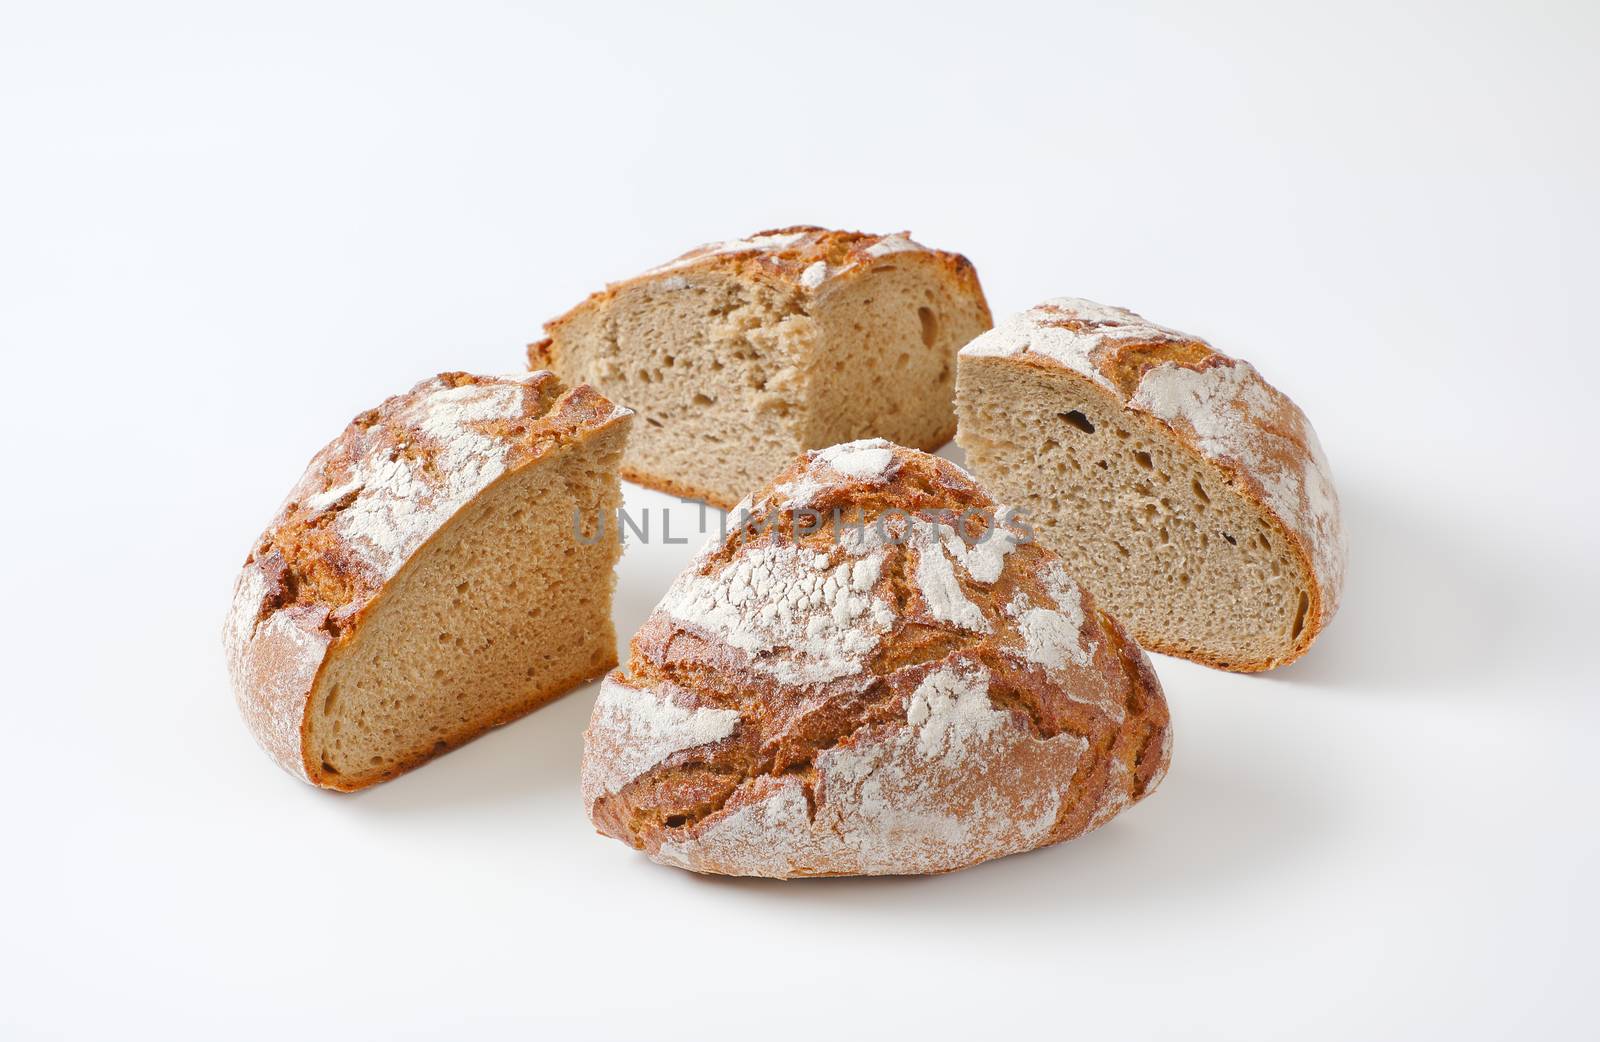 Rustic sourdough bread with crispy crust by Digifoodstock